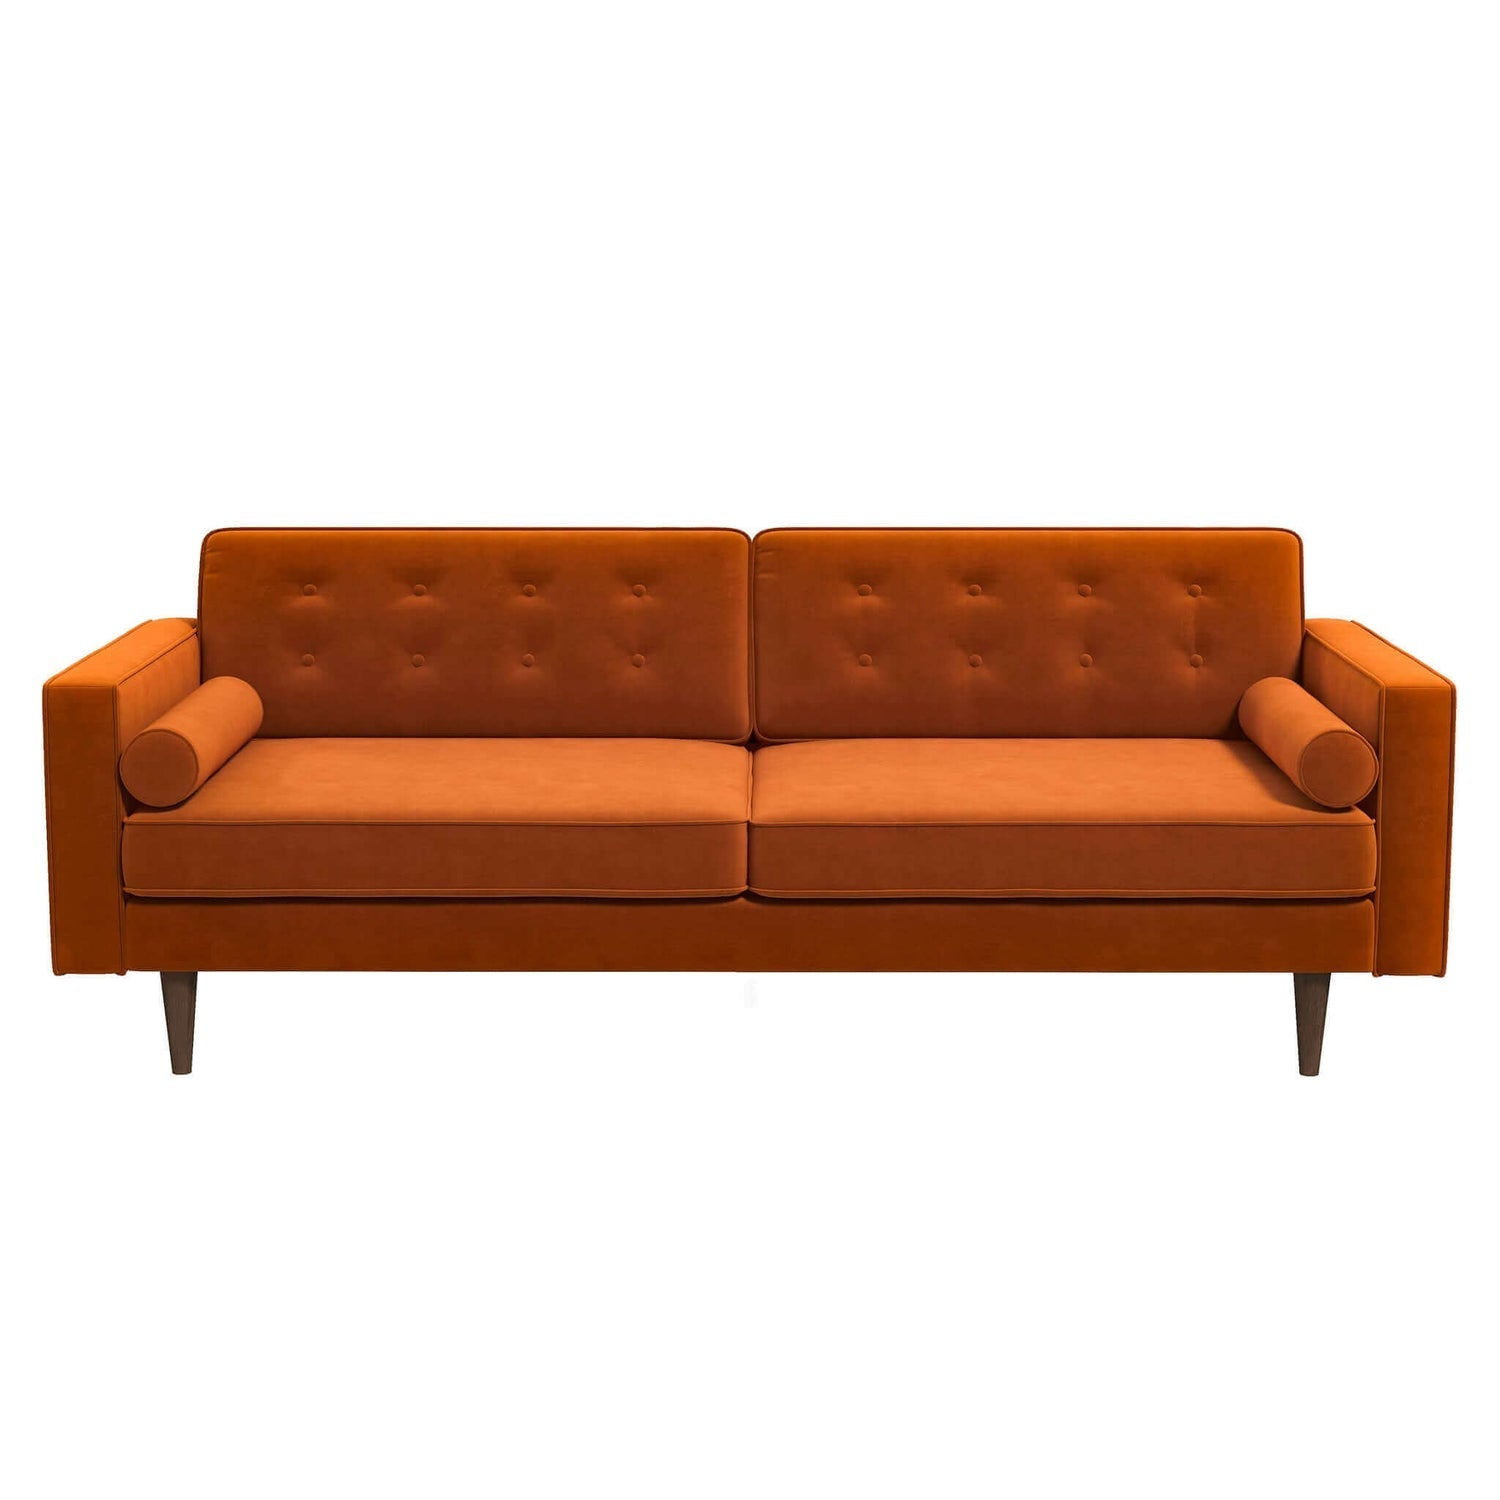 Kaleidoscopic Velvet Sofa with High Density Foam Cushion - Sofas